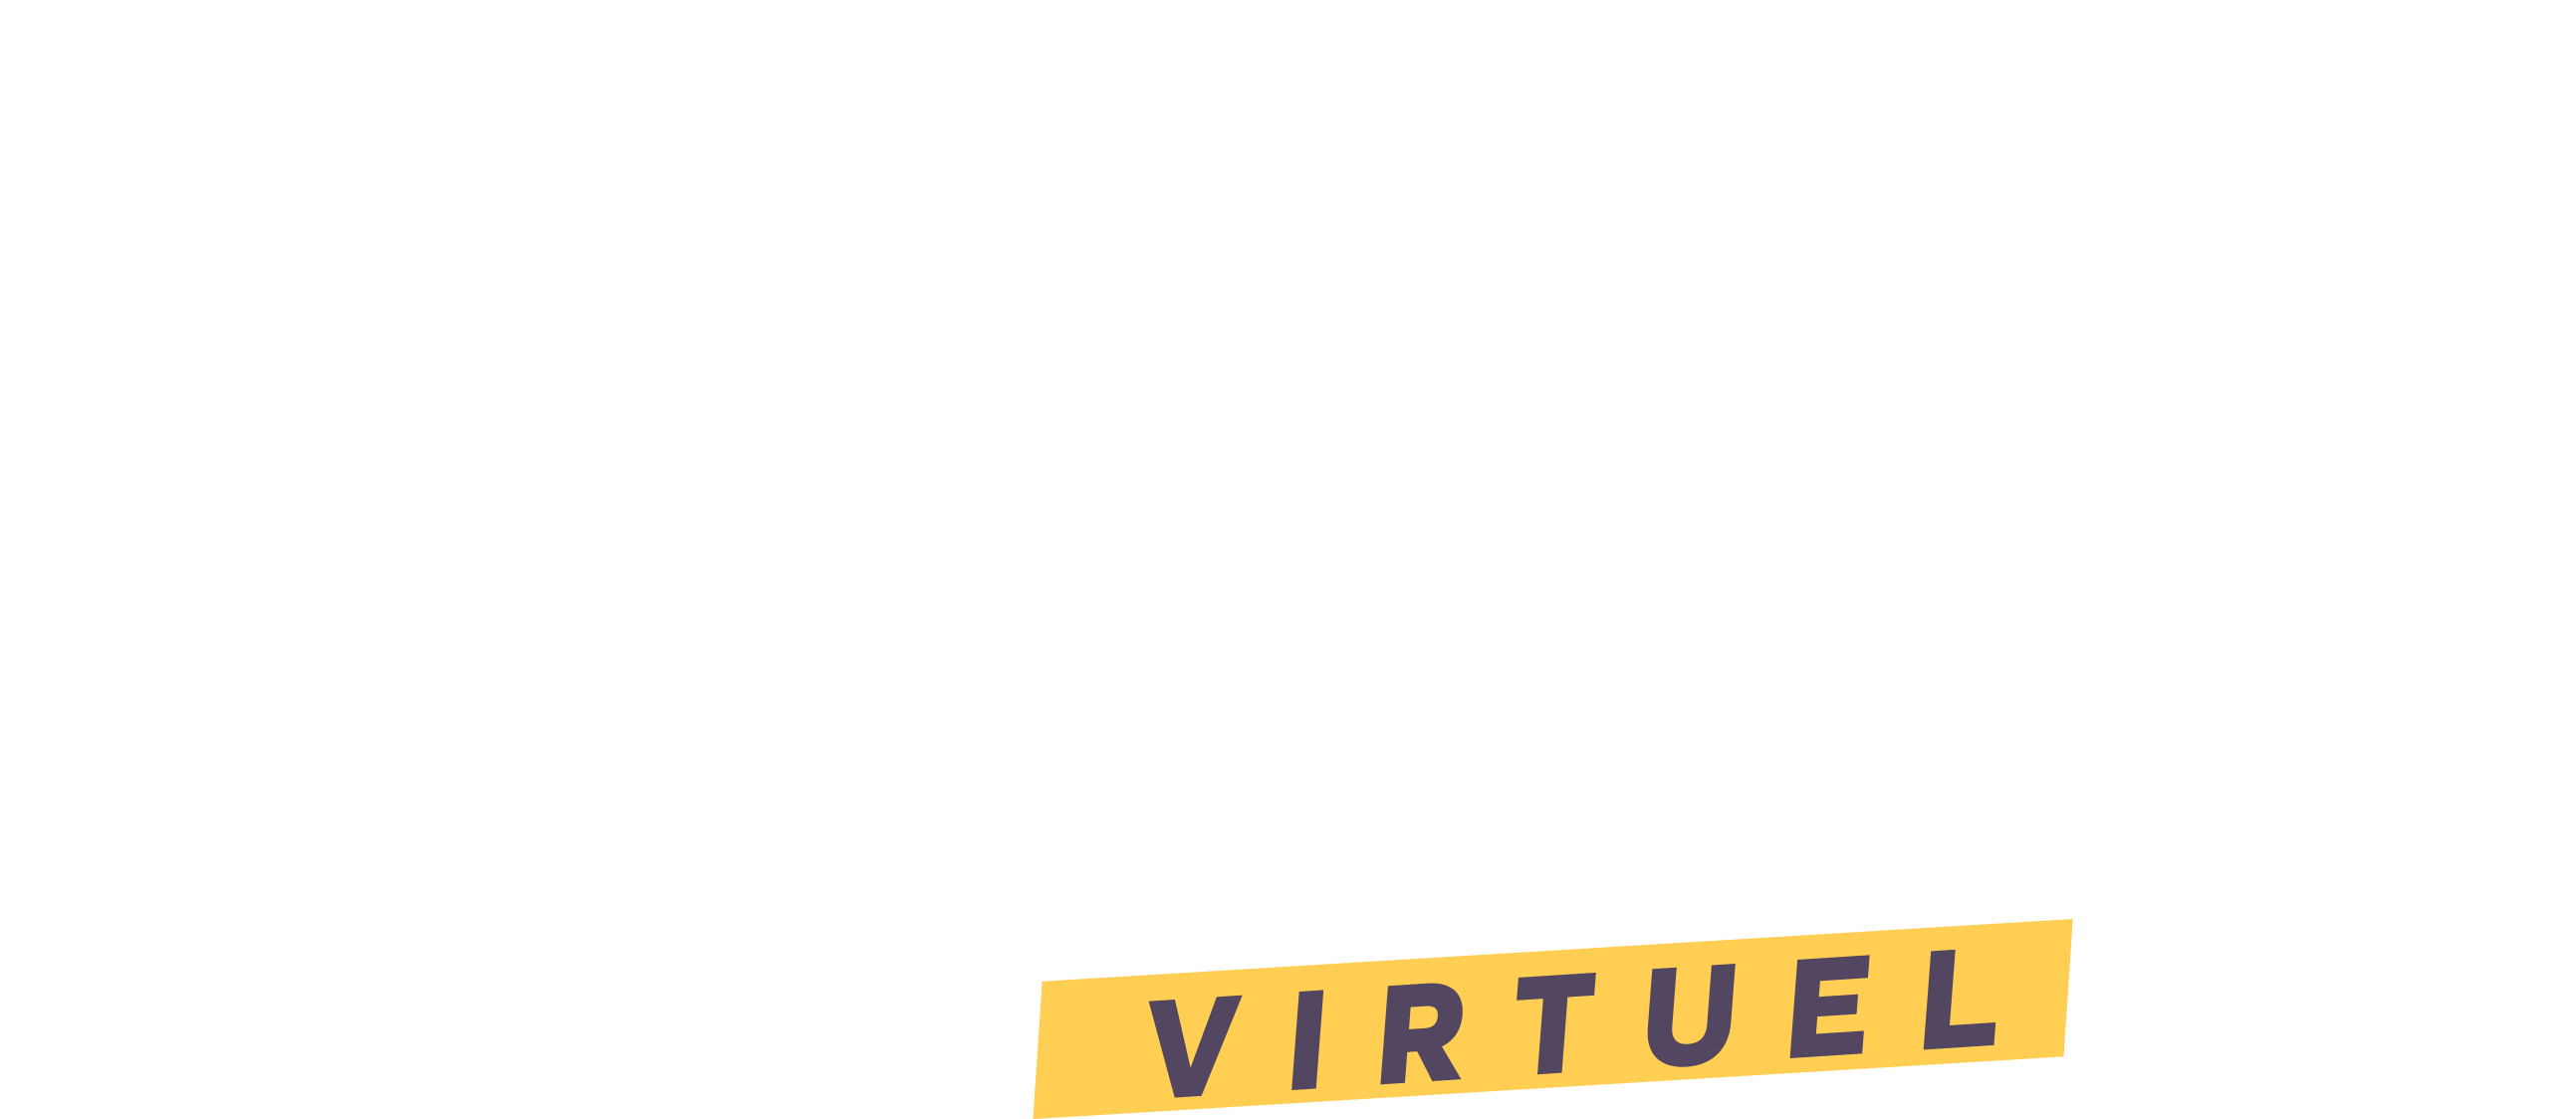 Forum Vacances Virtuel